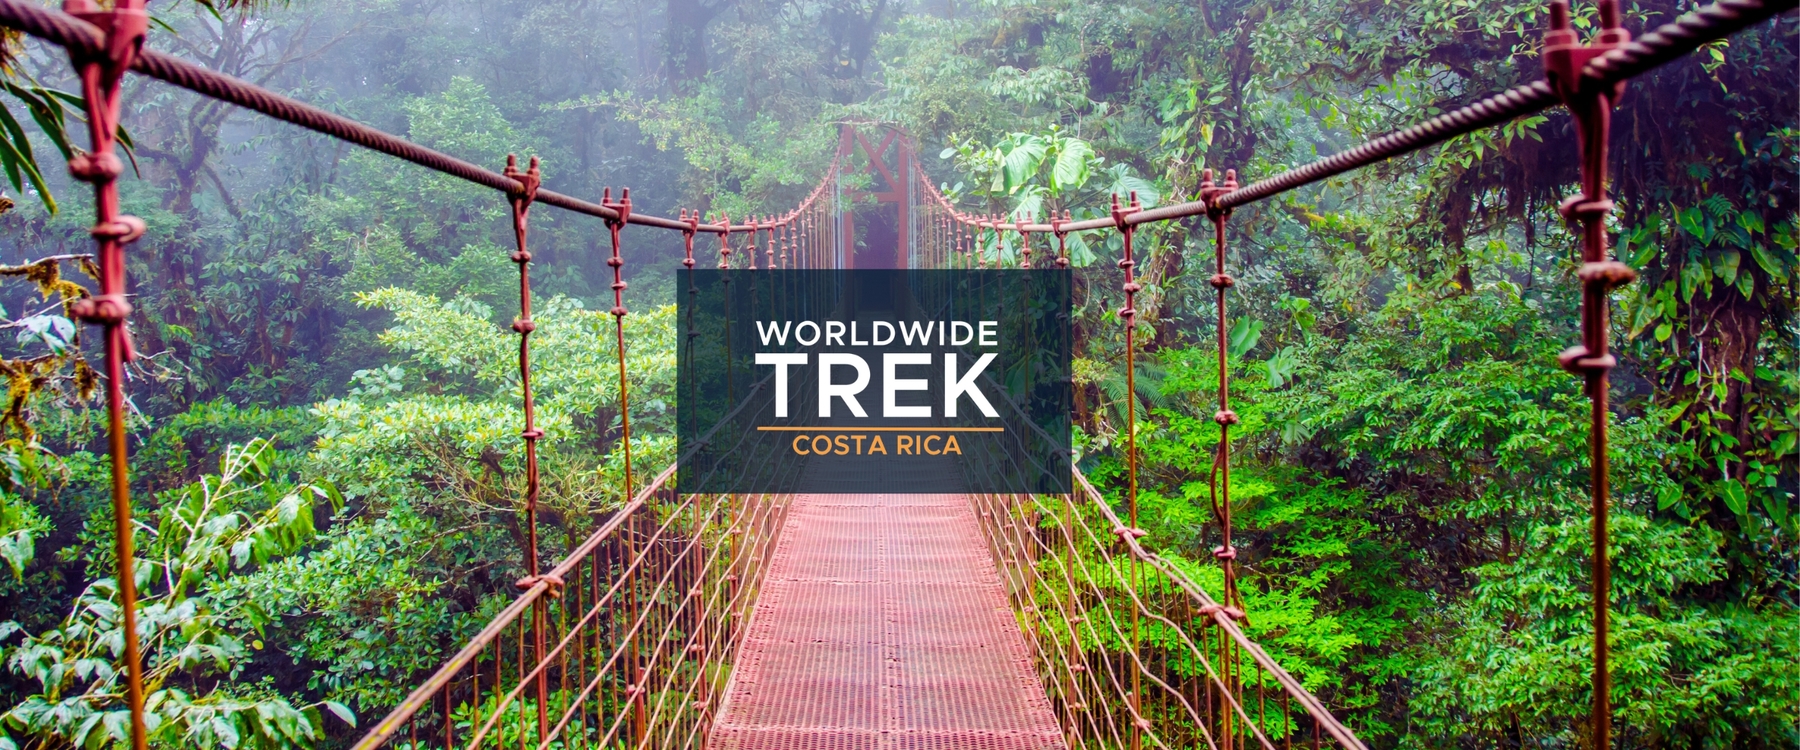 A suspended bridge in a Costa Rica jungle